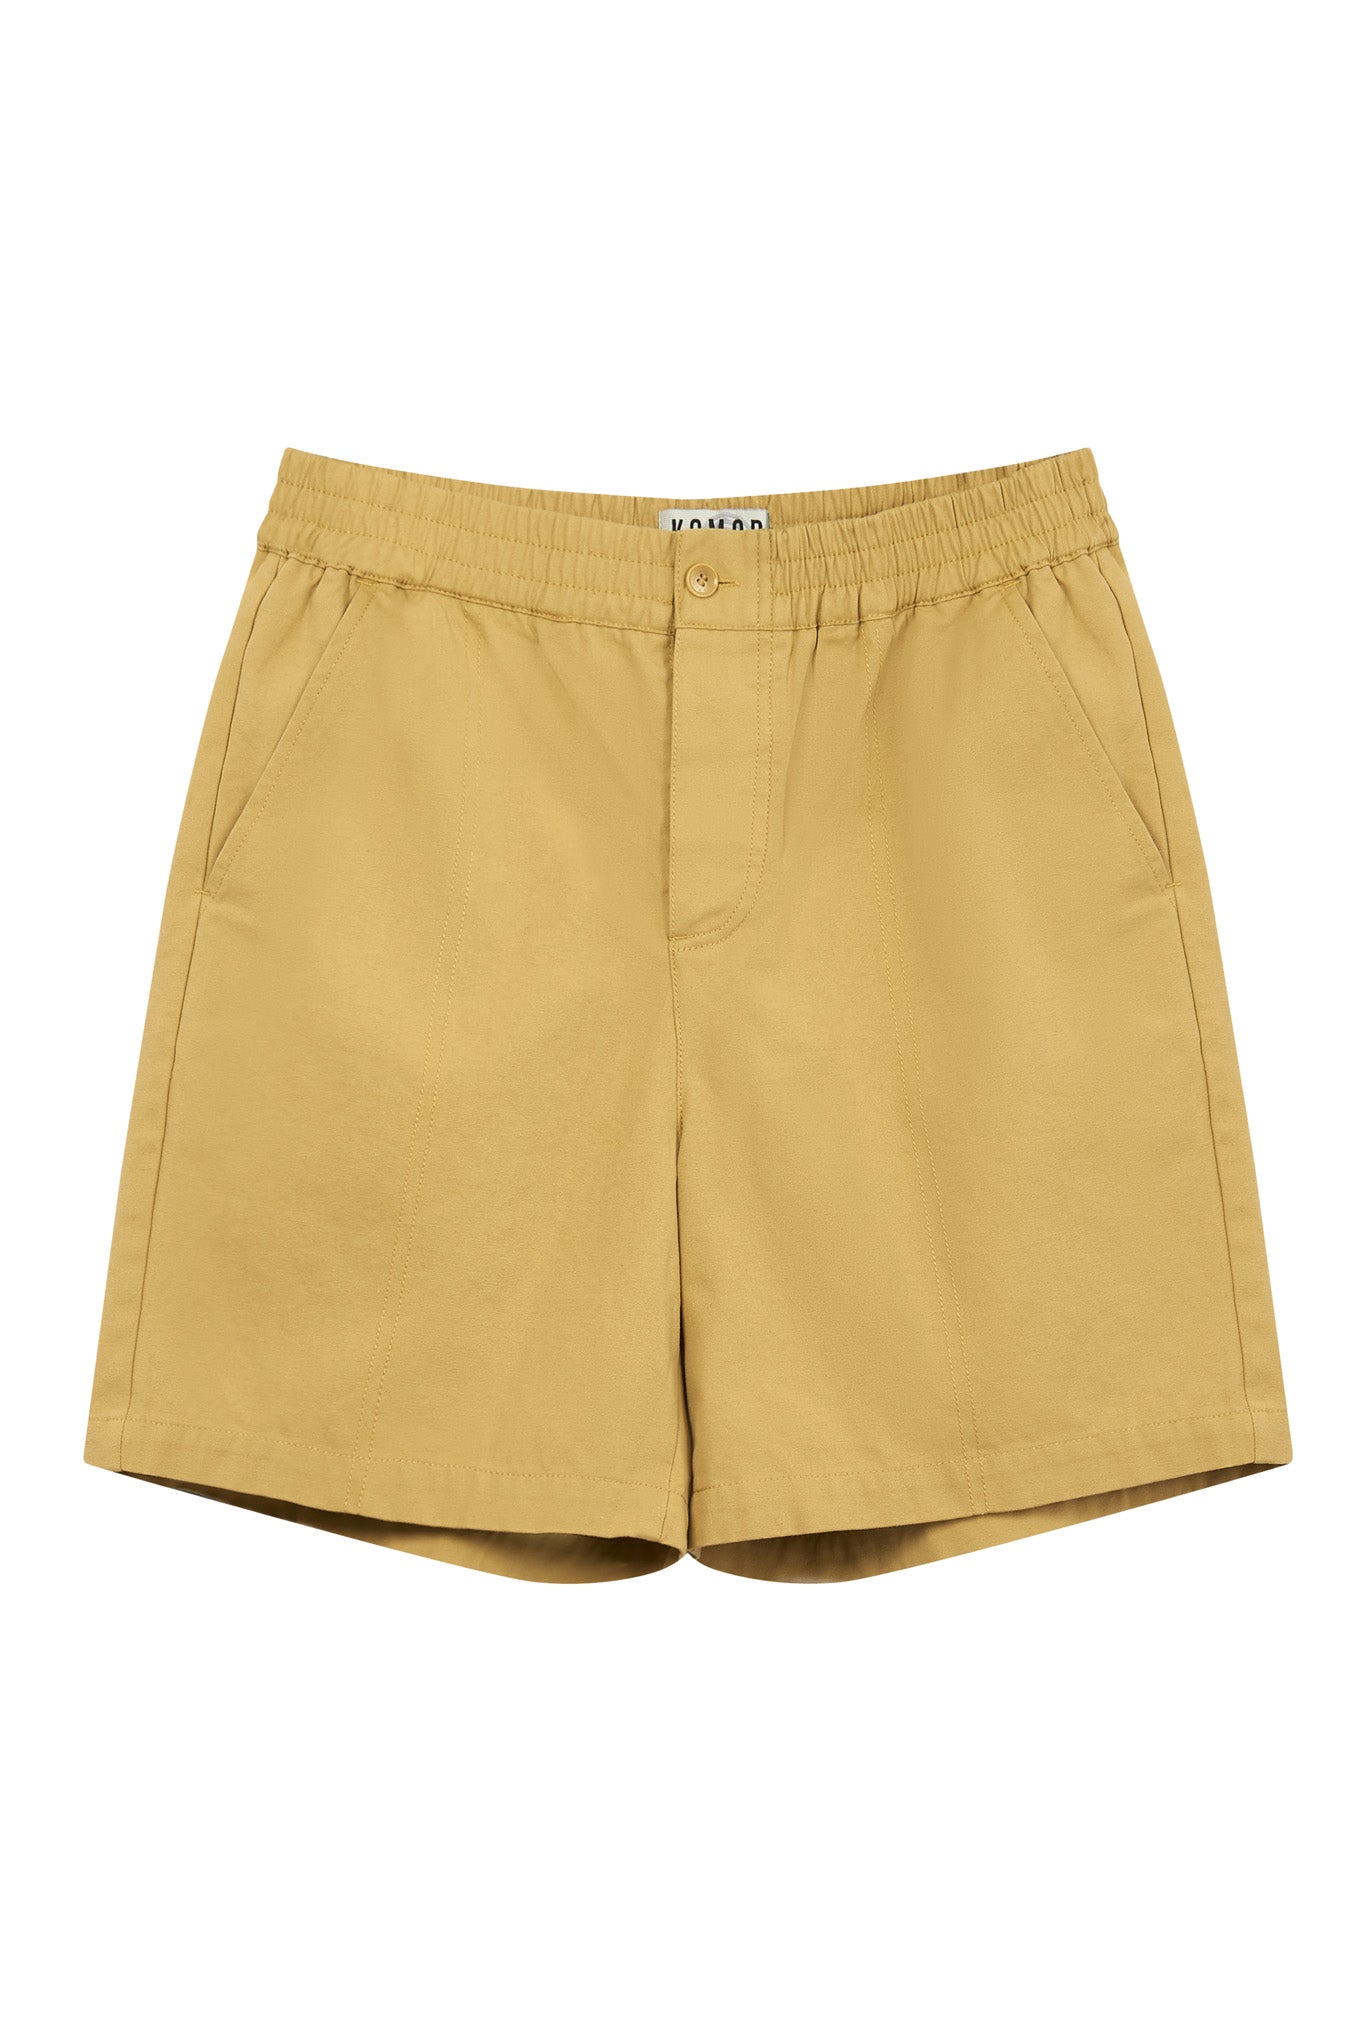 Yellow Mario shorts made from 100% organic cotton from Komodo